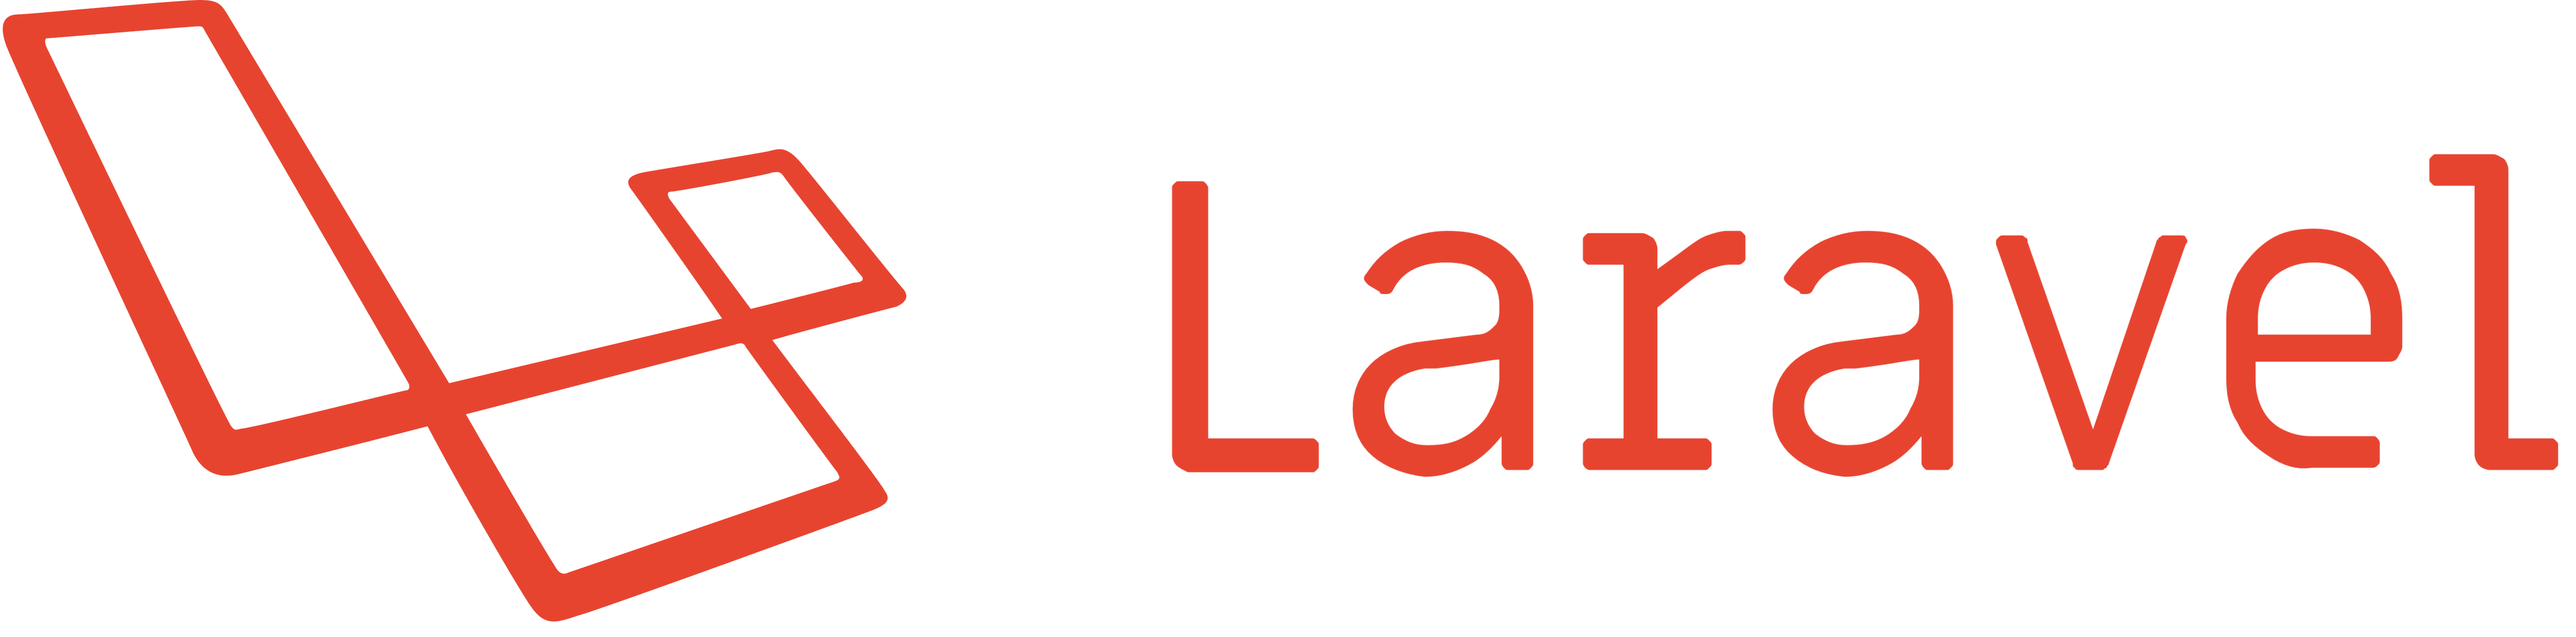 Laravel Logo PNG - 179682